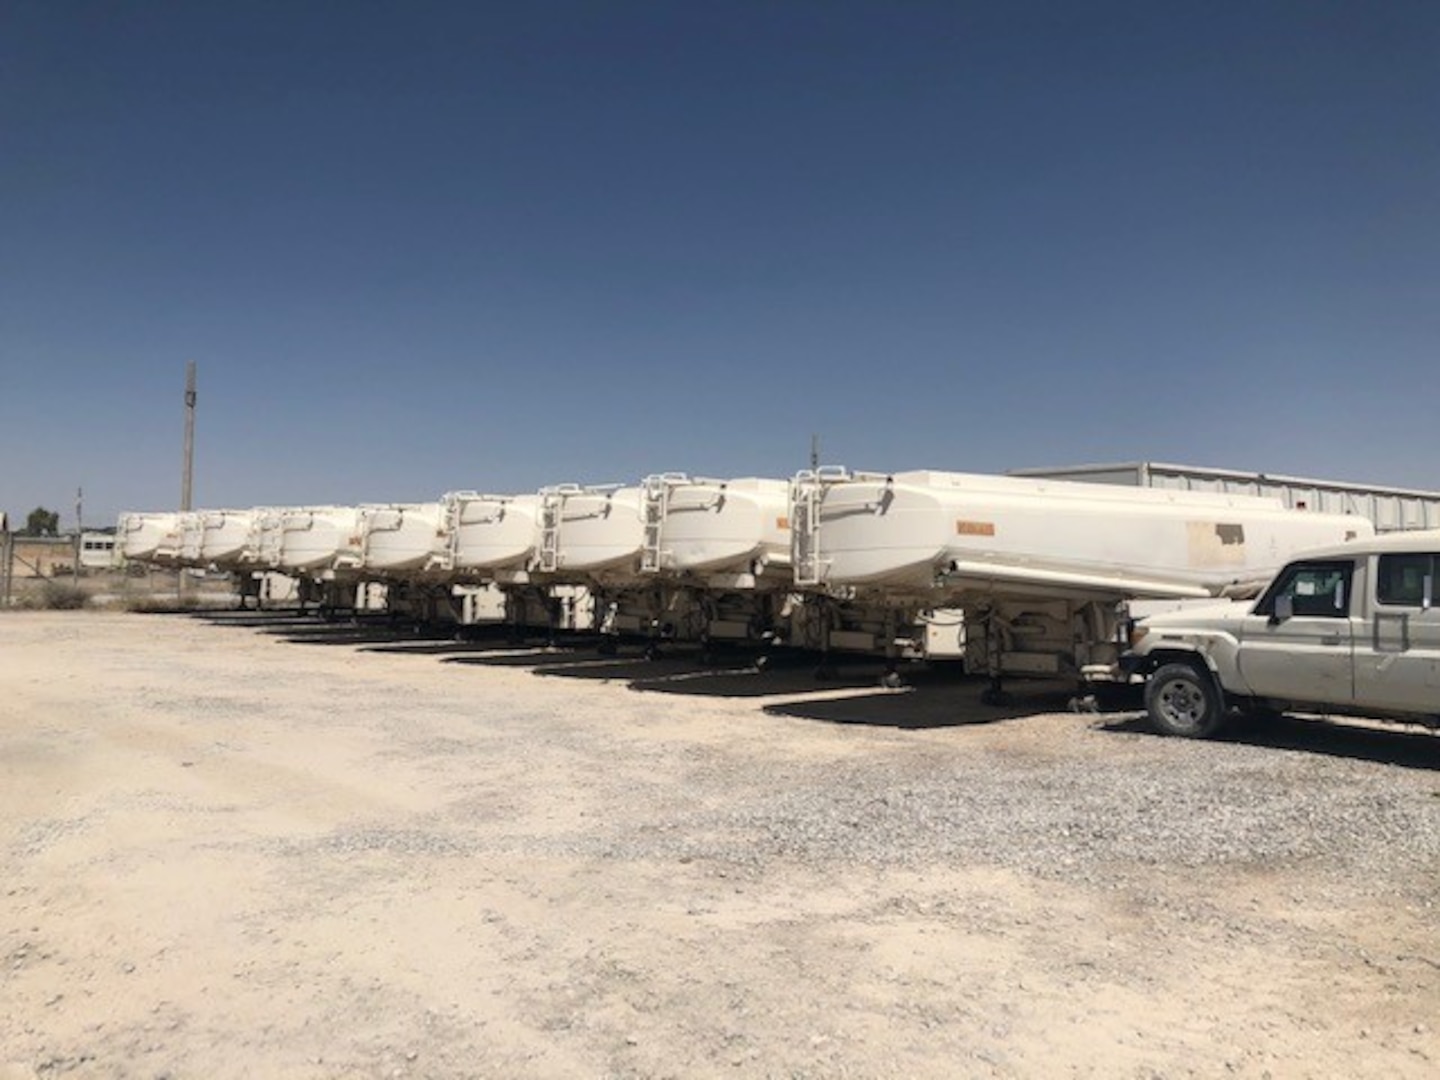 Tanks for ten NATO bulk fuel carriers awaiting destruction at DLA Disposition Services' Kandahar site.